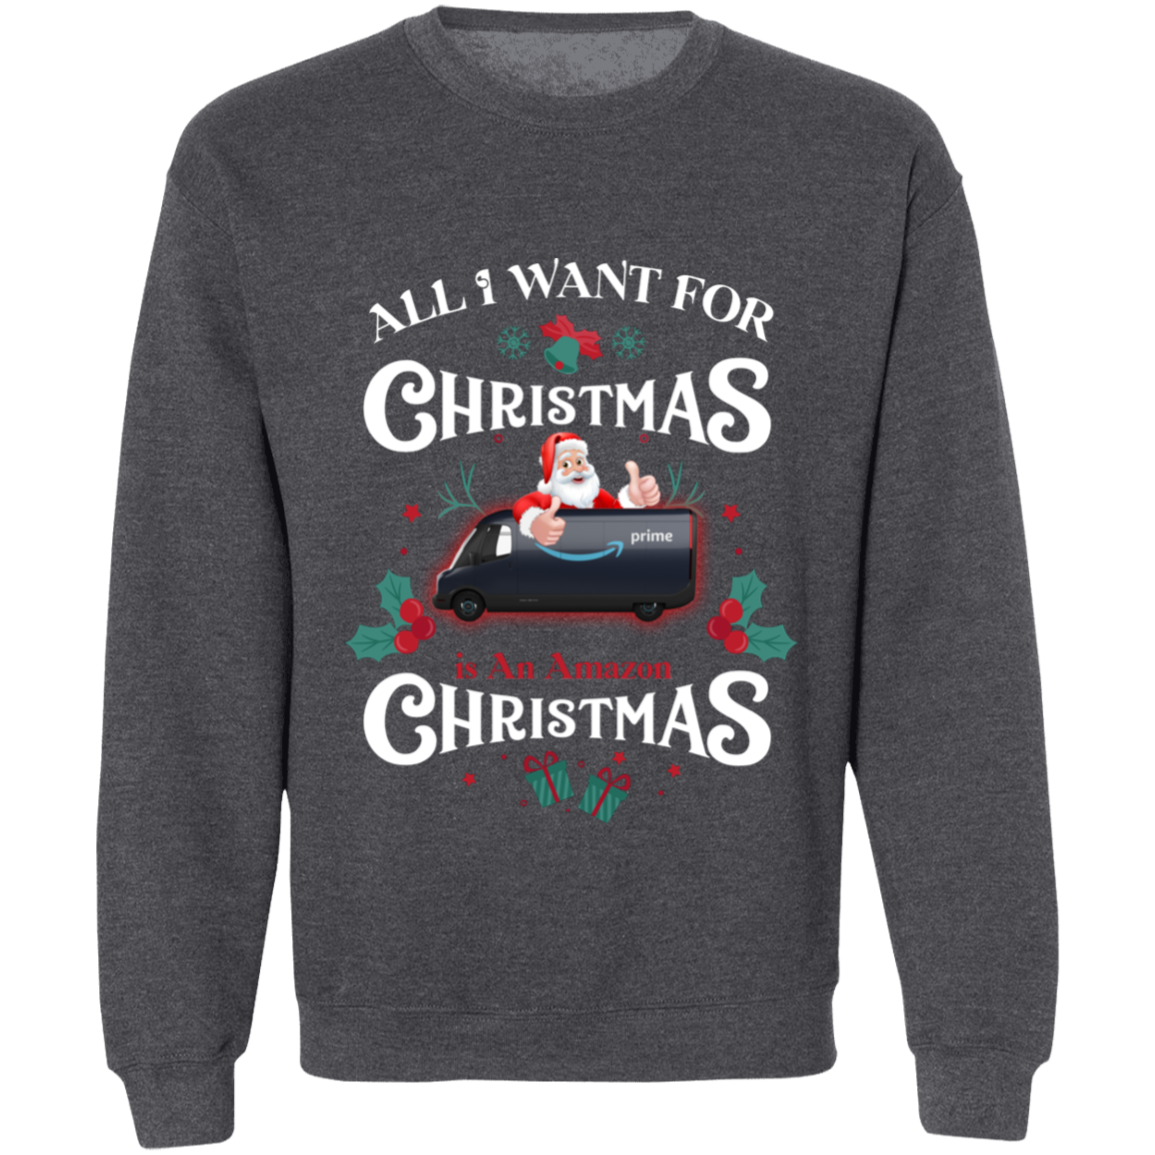 All I want for Christmas is An Amazon Christmas Sweatshirt